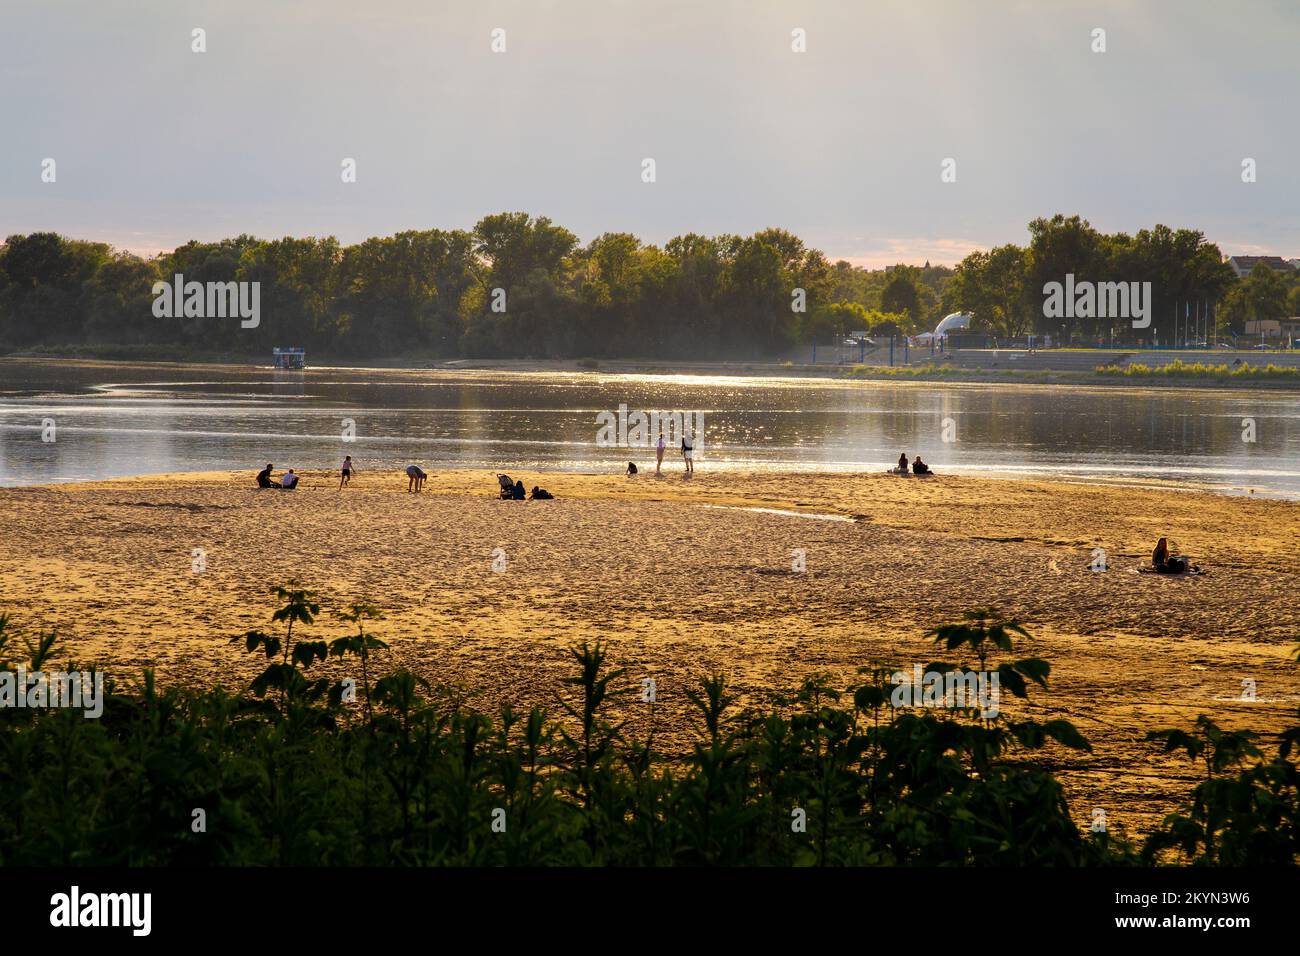 People enjoying a sunny day at the Vistula river riverbank city beach, Torun, Poland Stock Photo